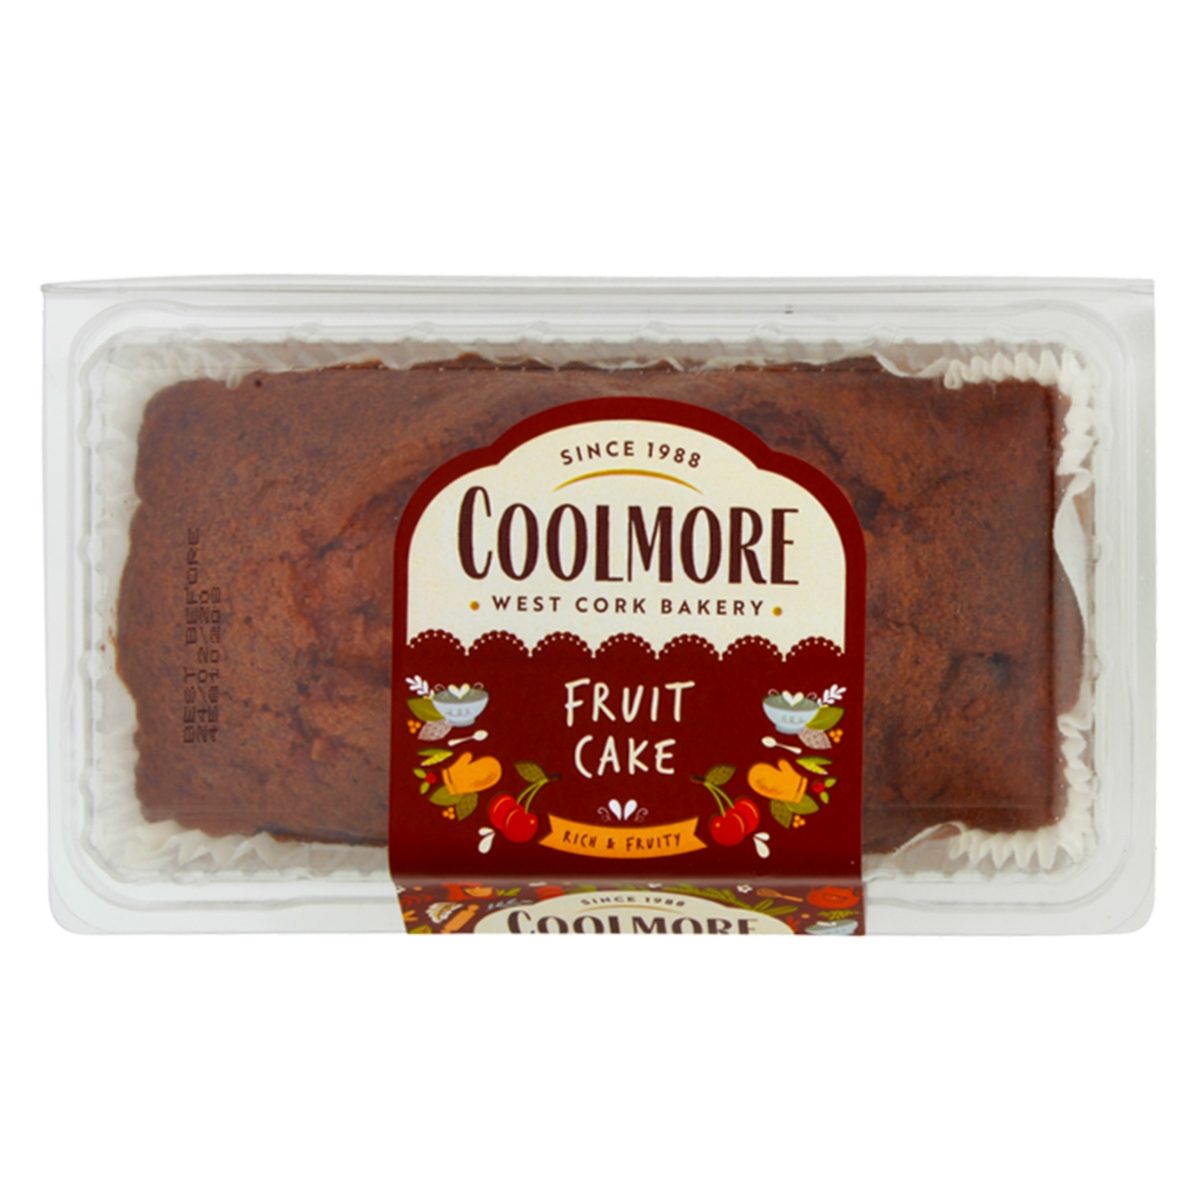 Coolmore West Cork Bakery Fruit Cake 400g (July - Nov 23) RRP £2.79 CLEARANCE XL £1